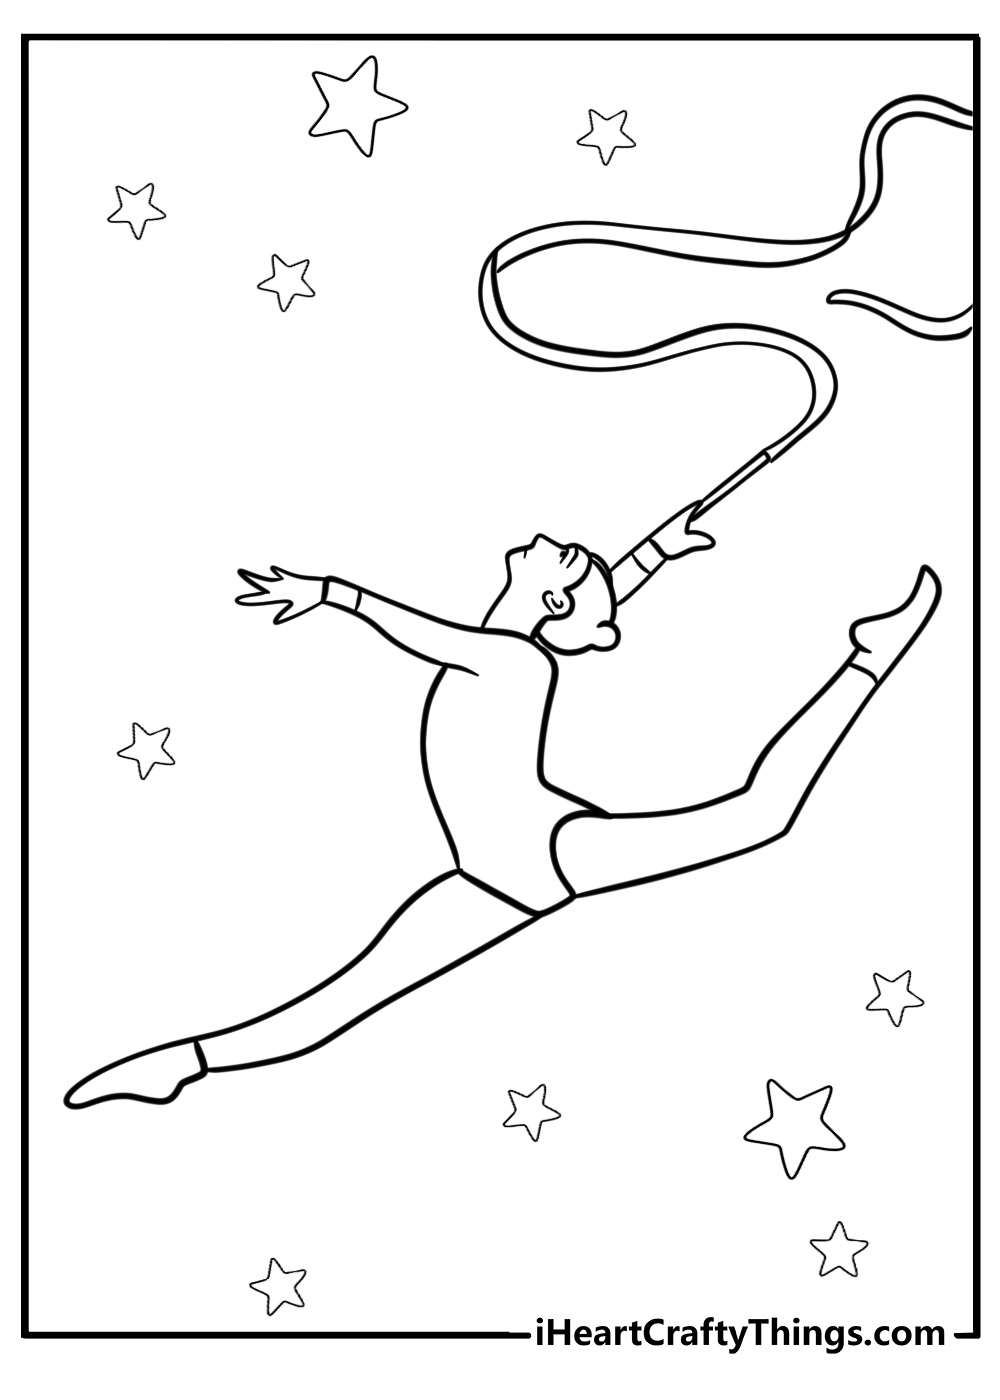 Gymnastics coloring page of rhythmic gymnast air split with ribbon